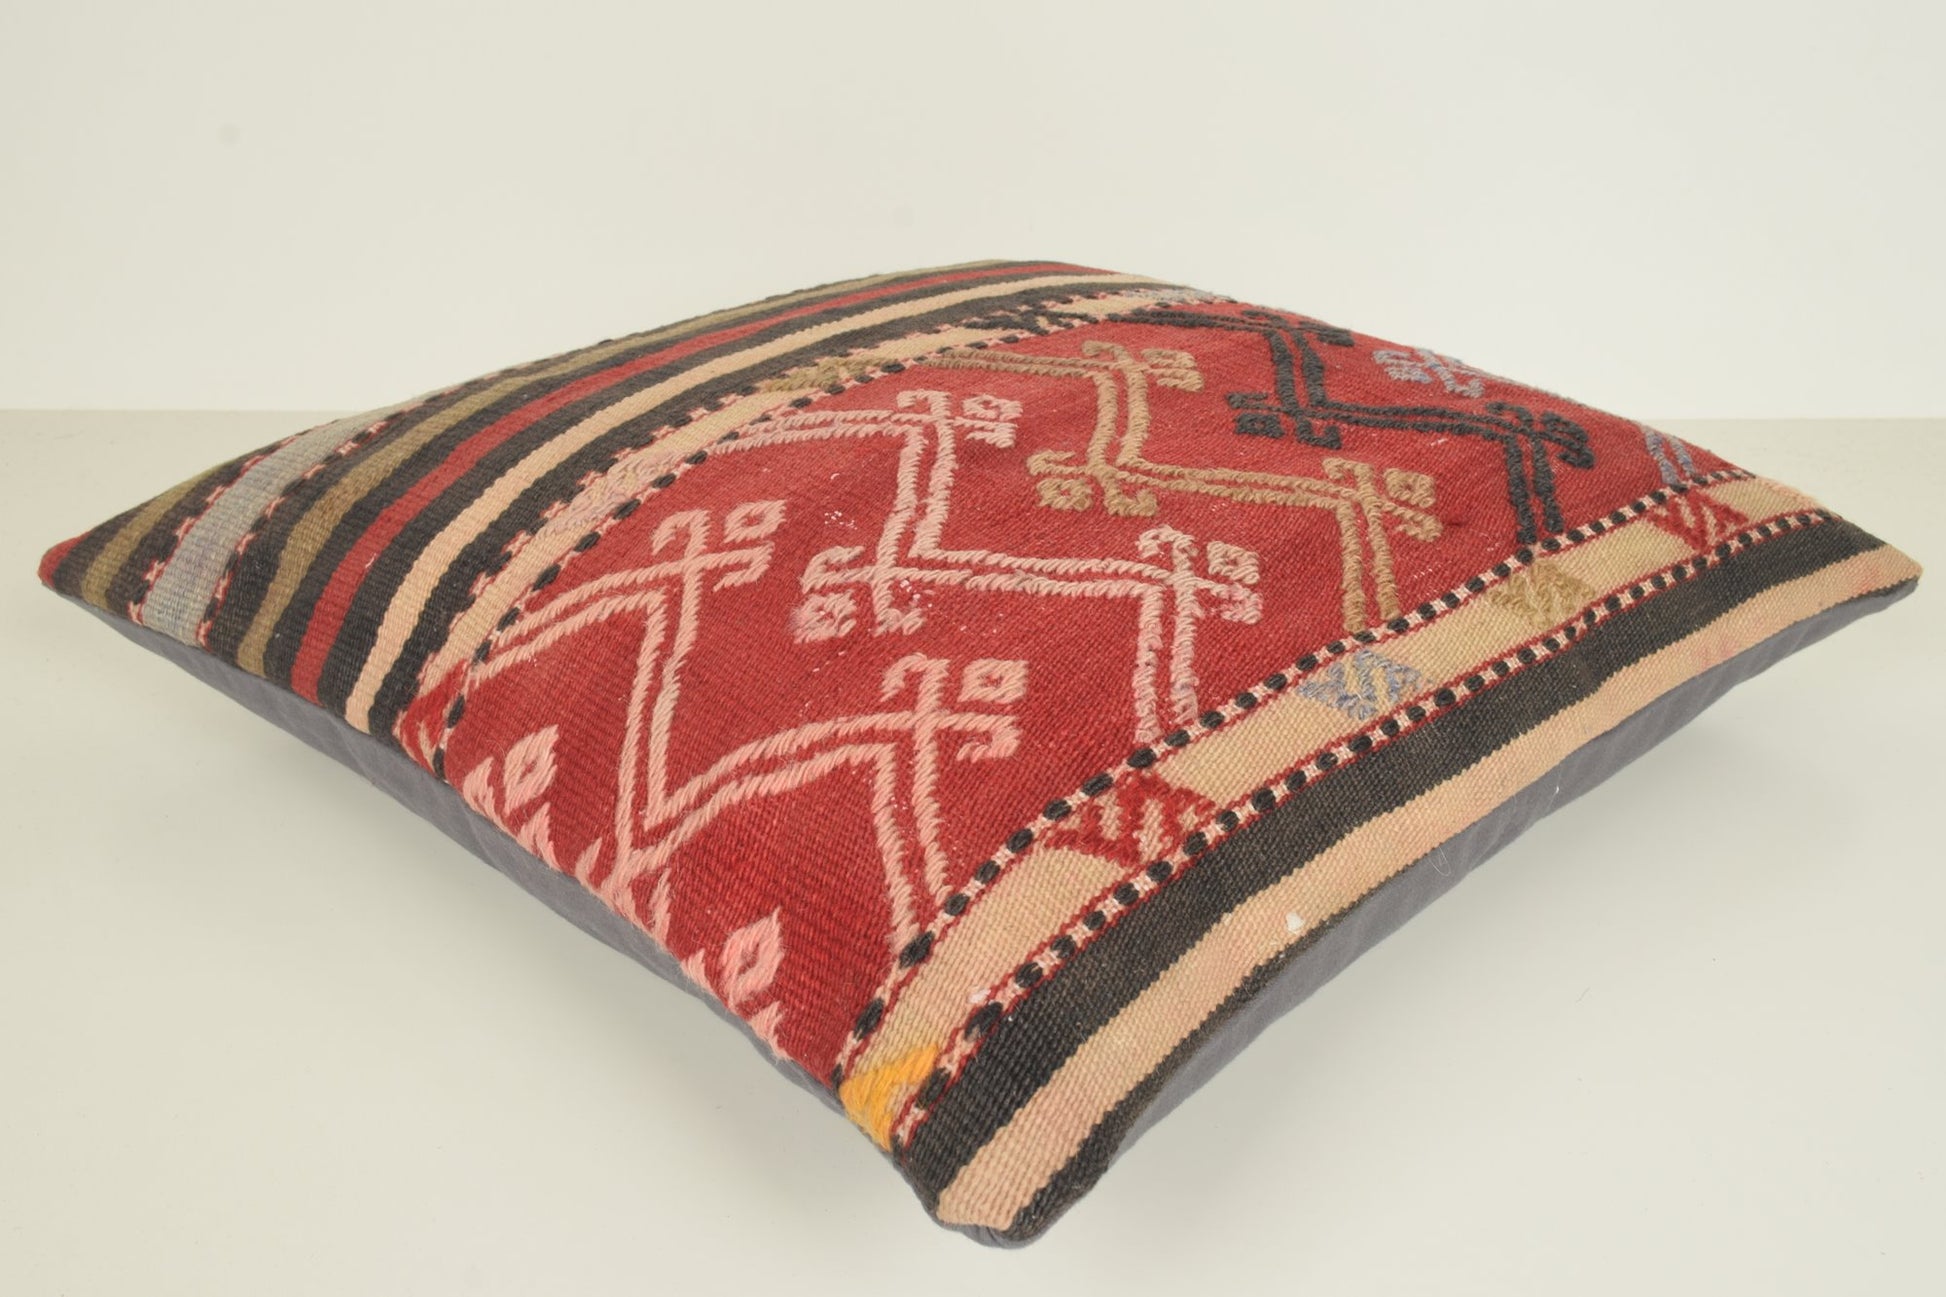 Turkish Wedding Pillow B01761 20x20 Tapestry Geometric Economic